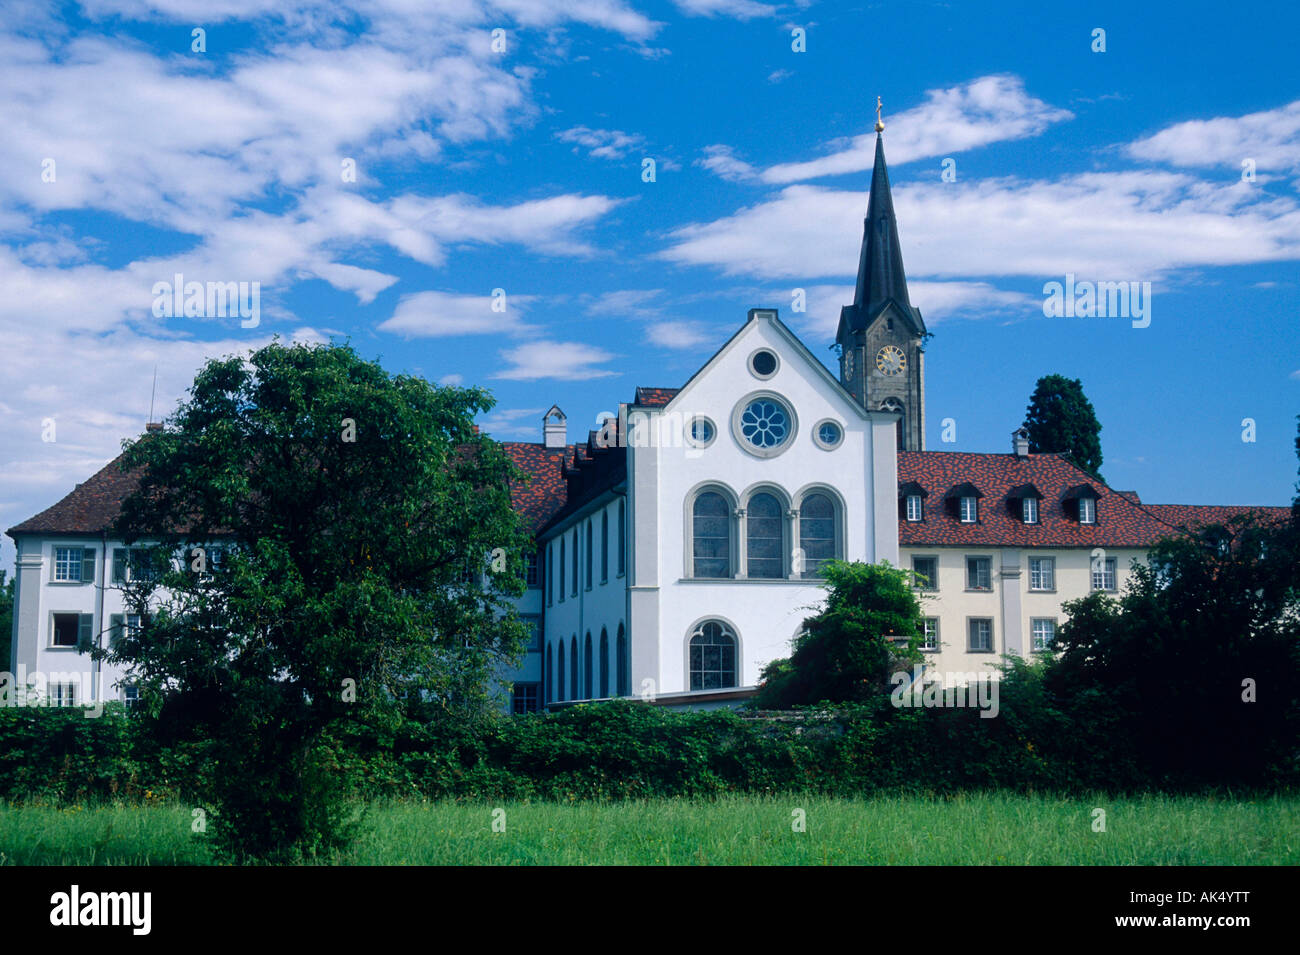 Monastery Mererau / Bregenz Stock Photo